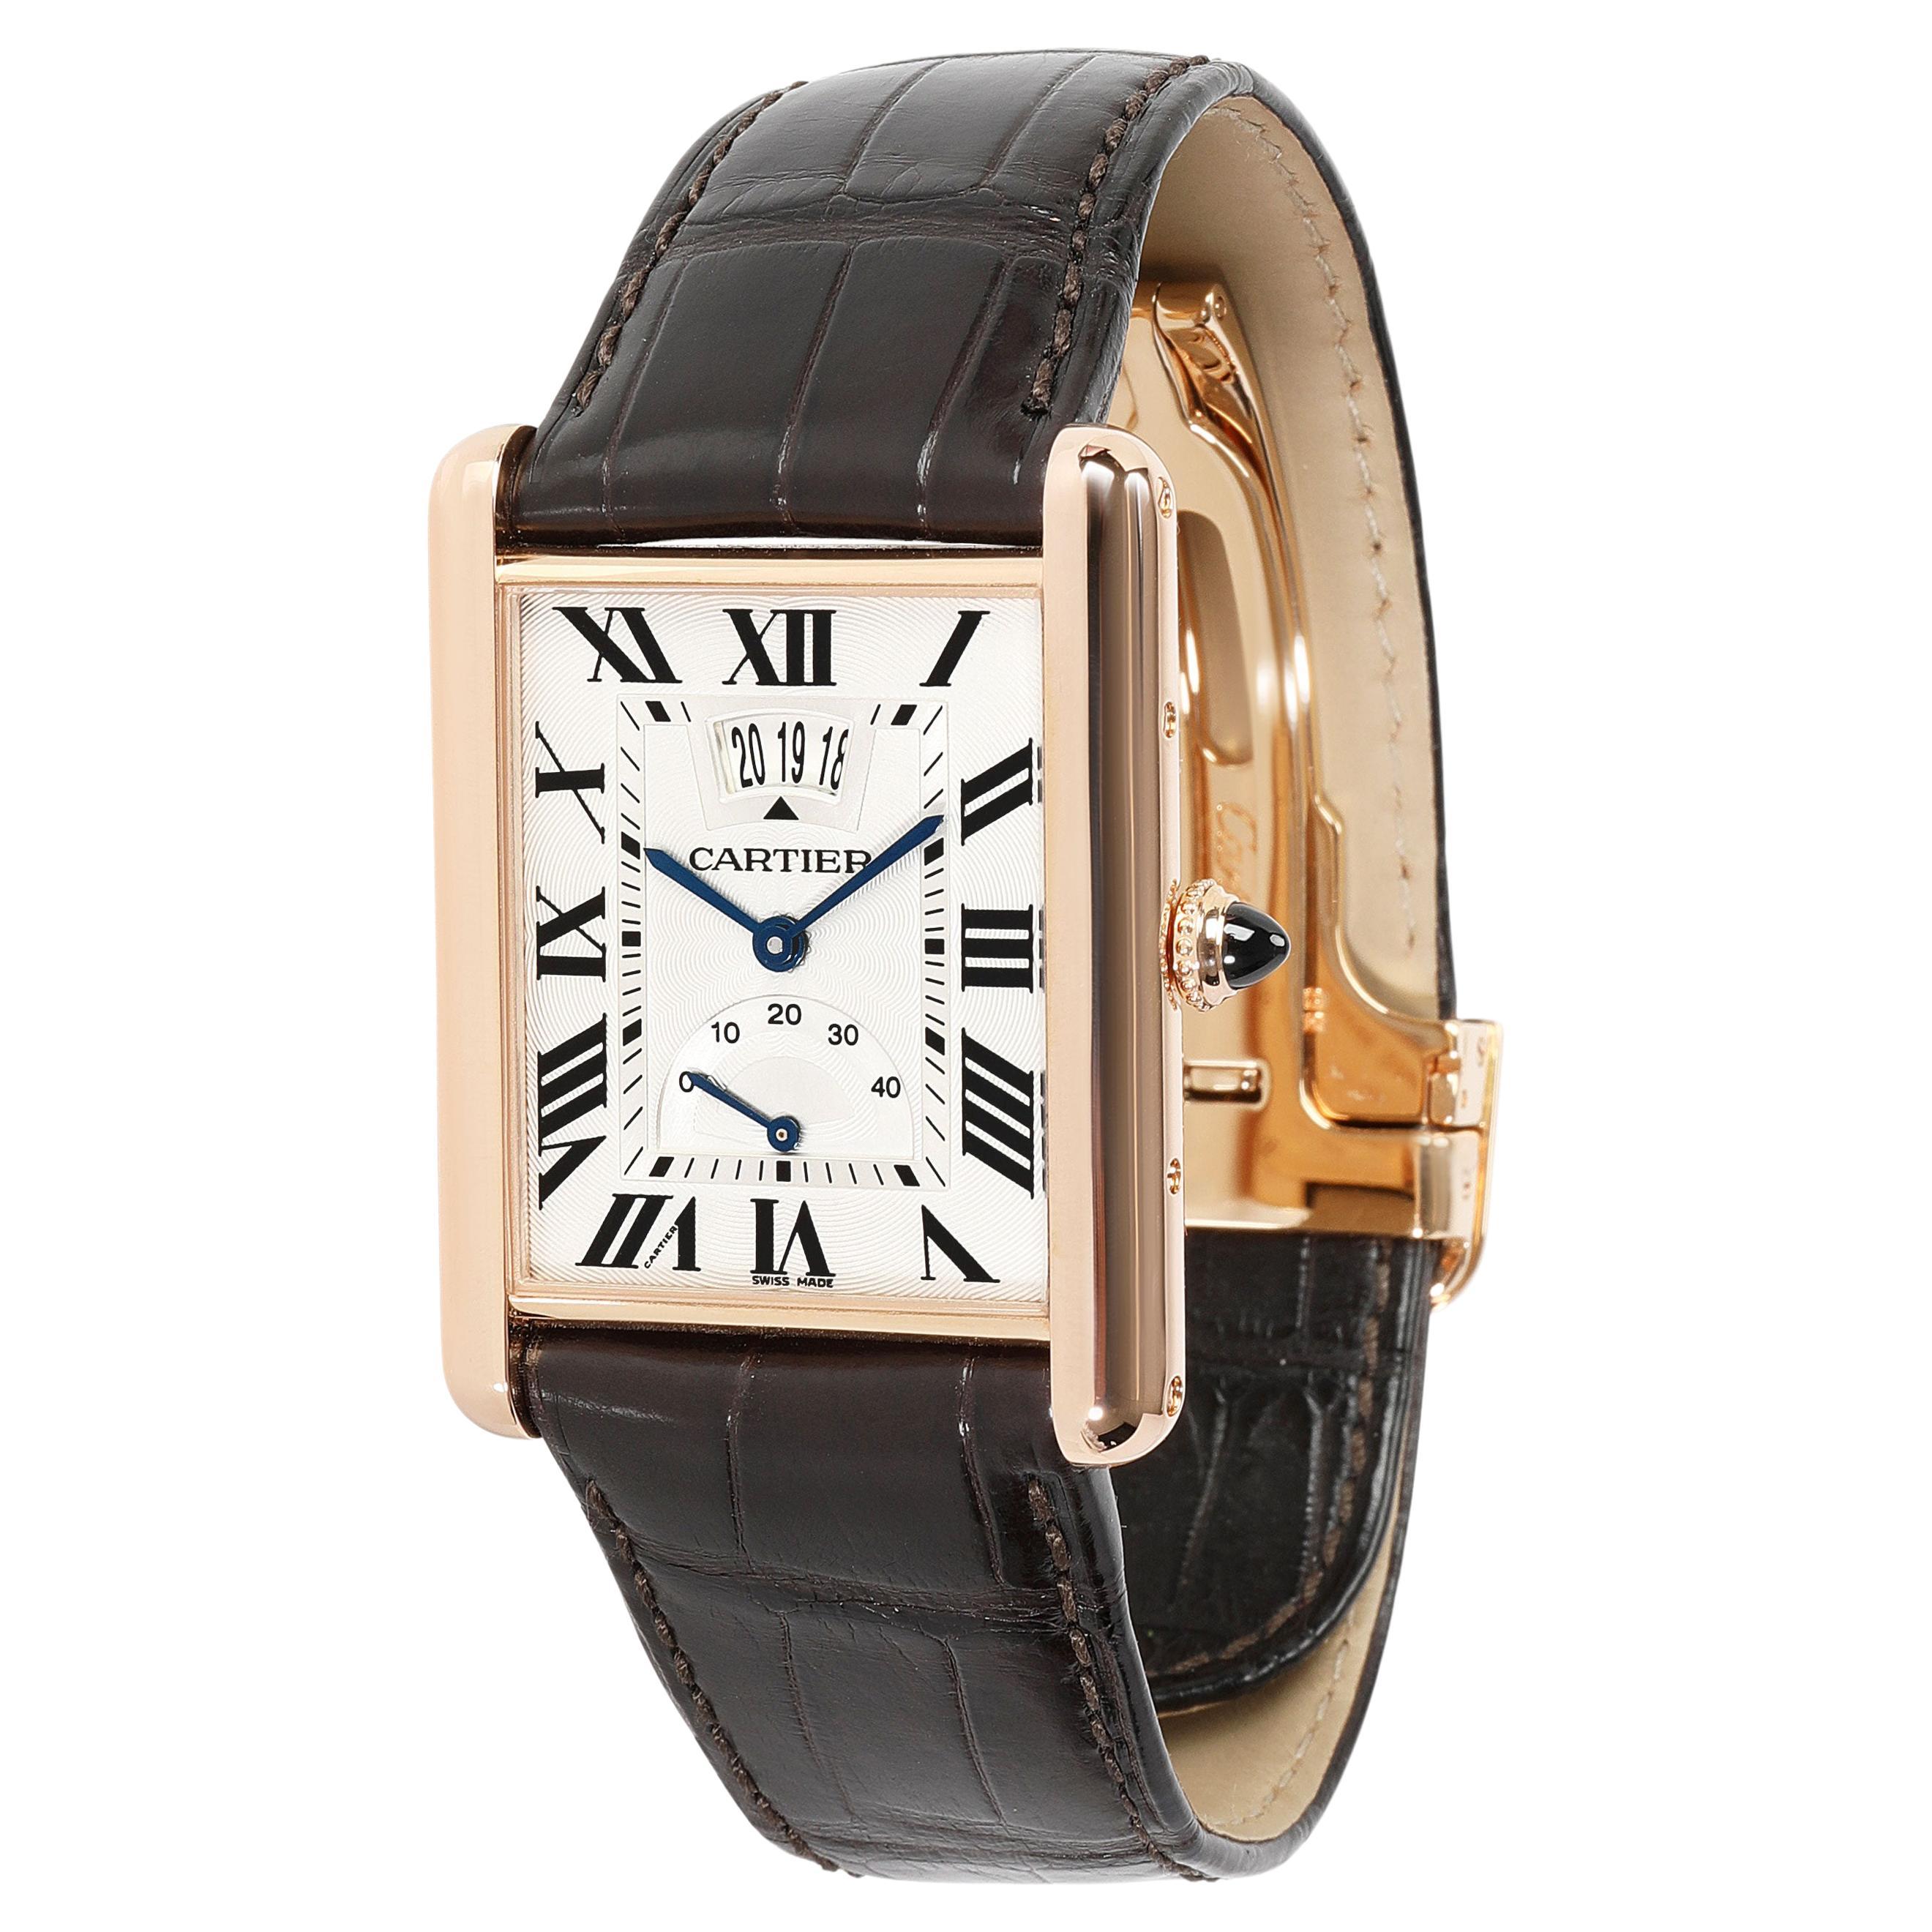 Cartier Tank Louis Cartier W5160003 Men's Watch in 18kt Rose Gold